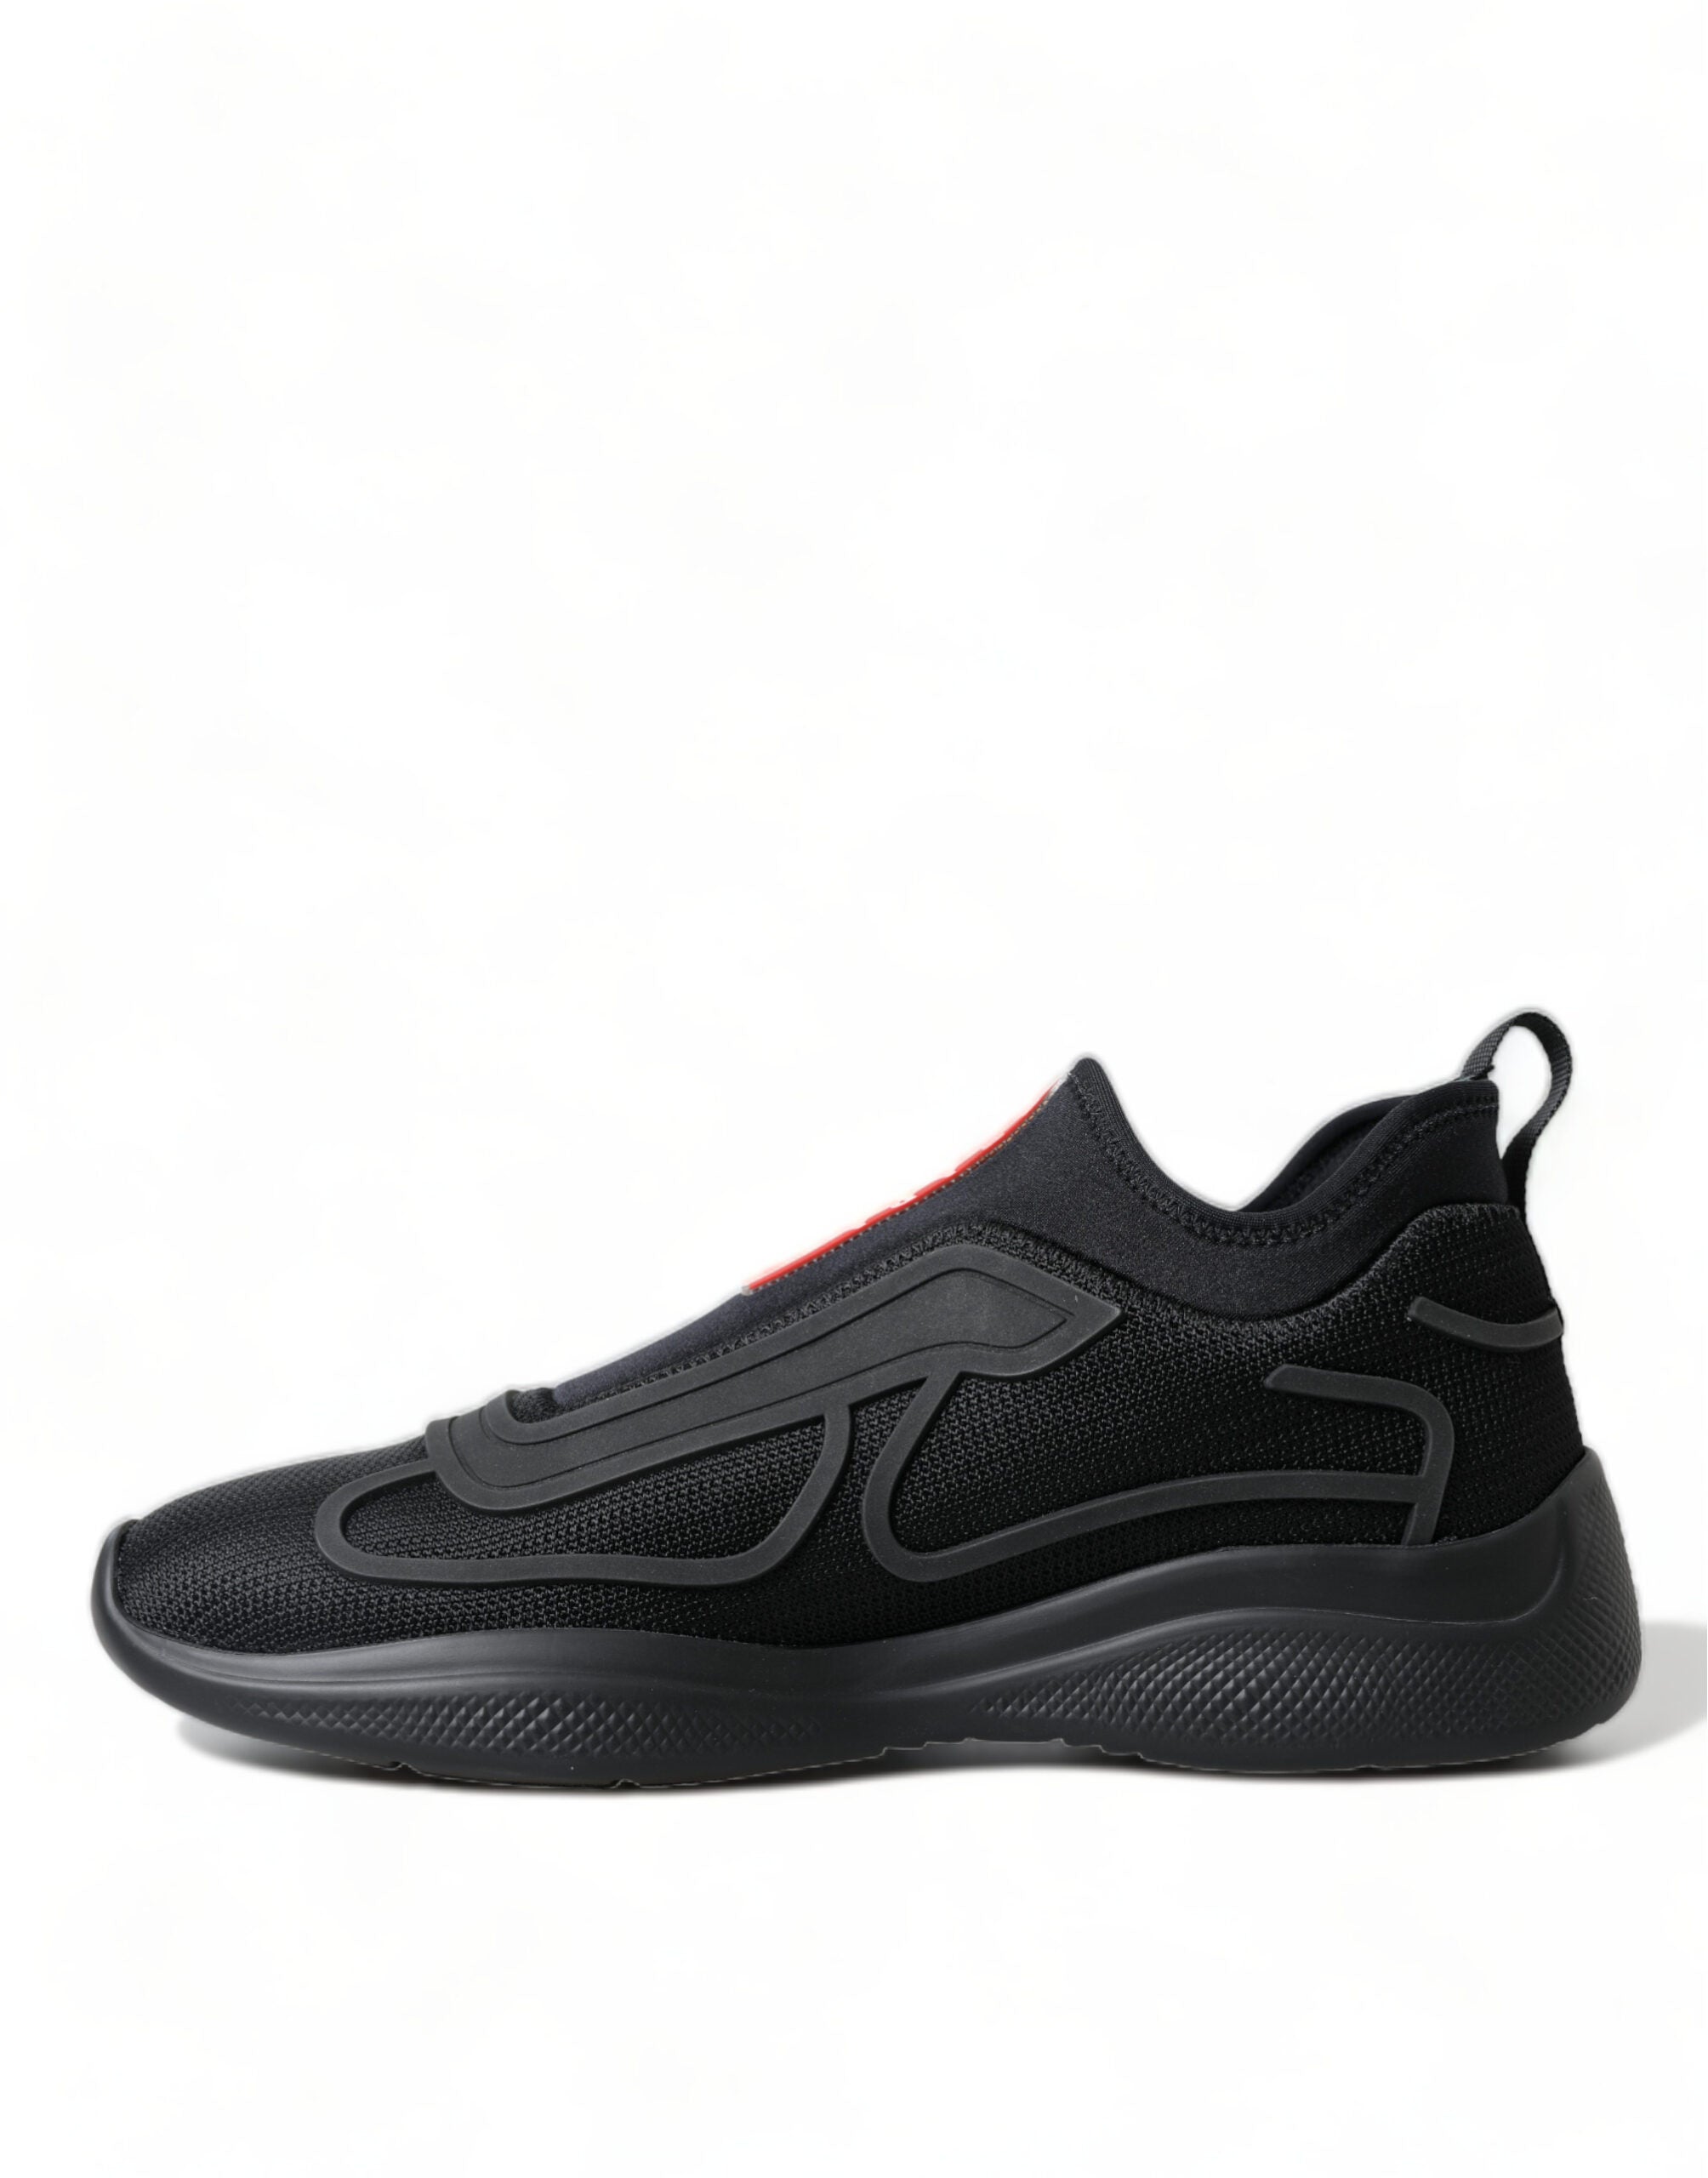 Prada Black Technical Bike Knit Slip On Men Sneakers Shoes